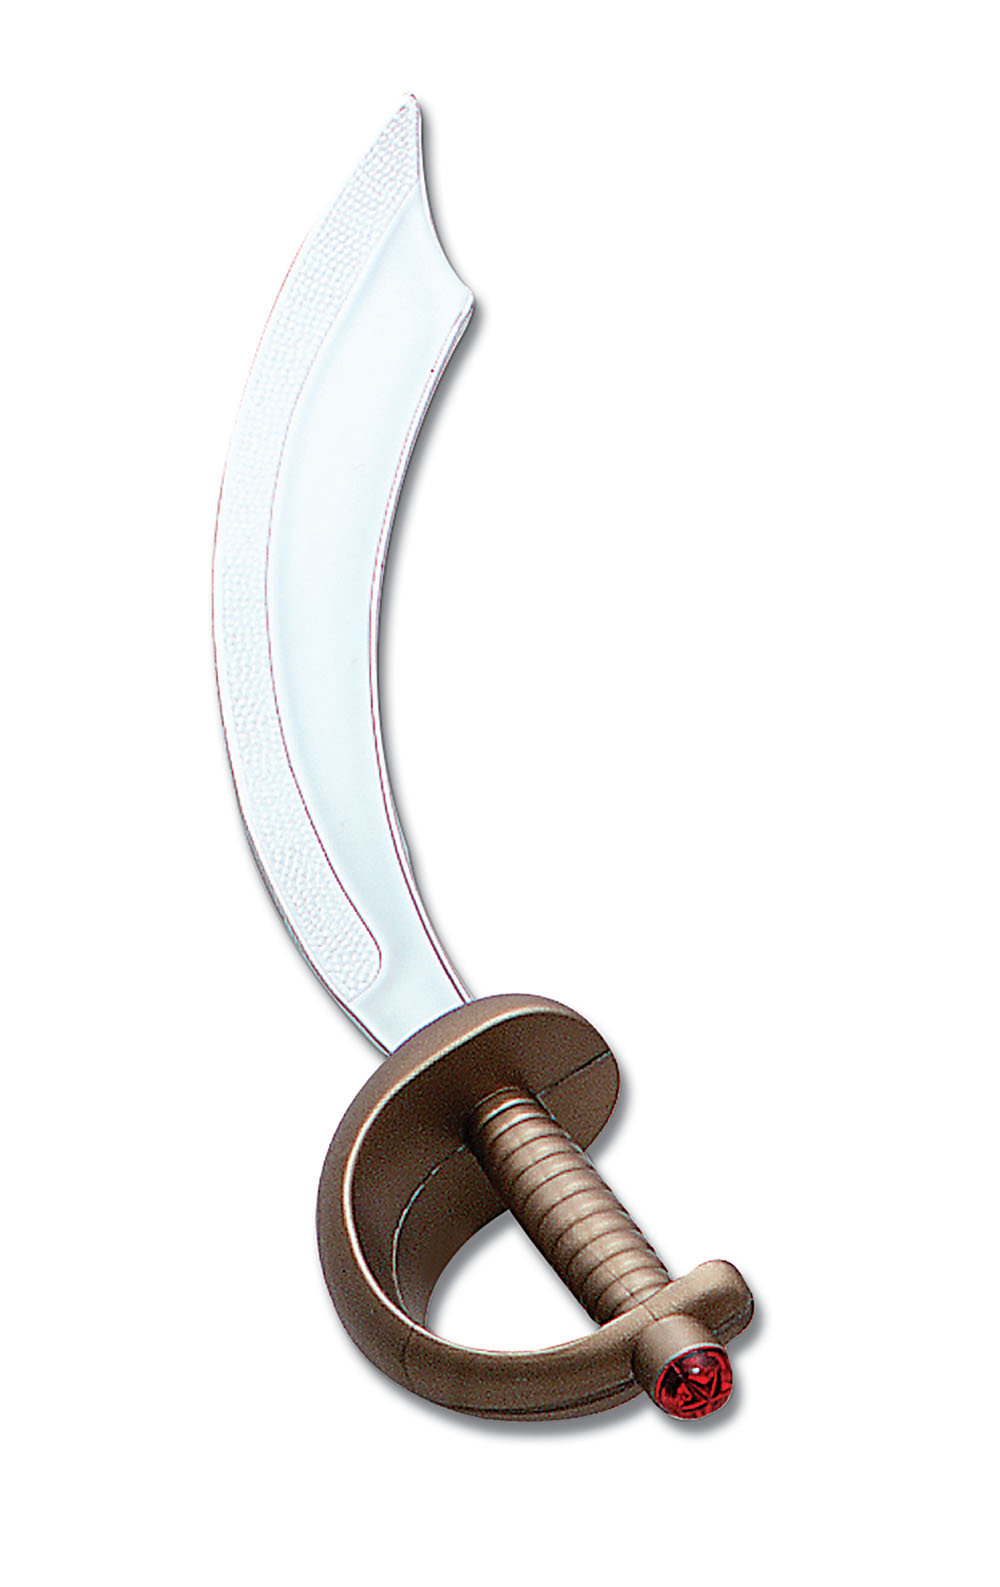 Pirate Cutlass, Pirate Sword, Arabian Sword Gold/Silver Jewelled